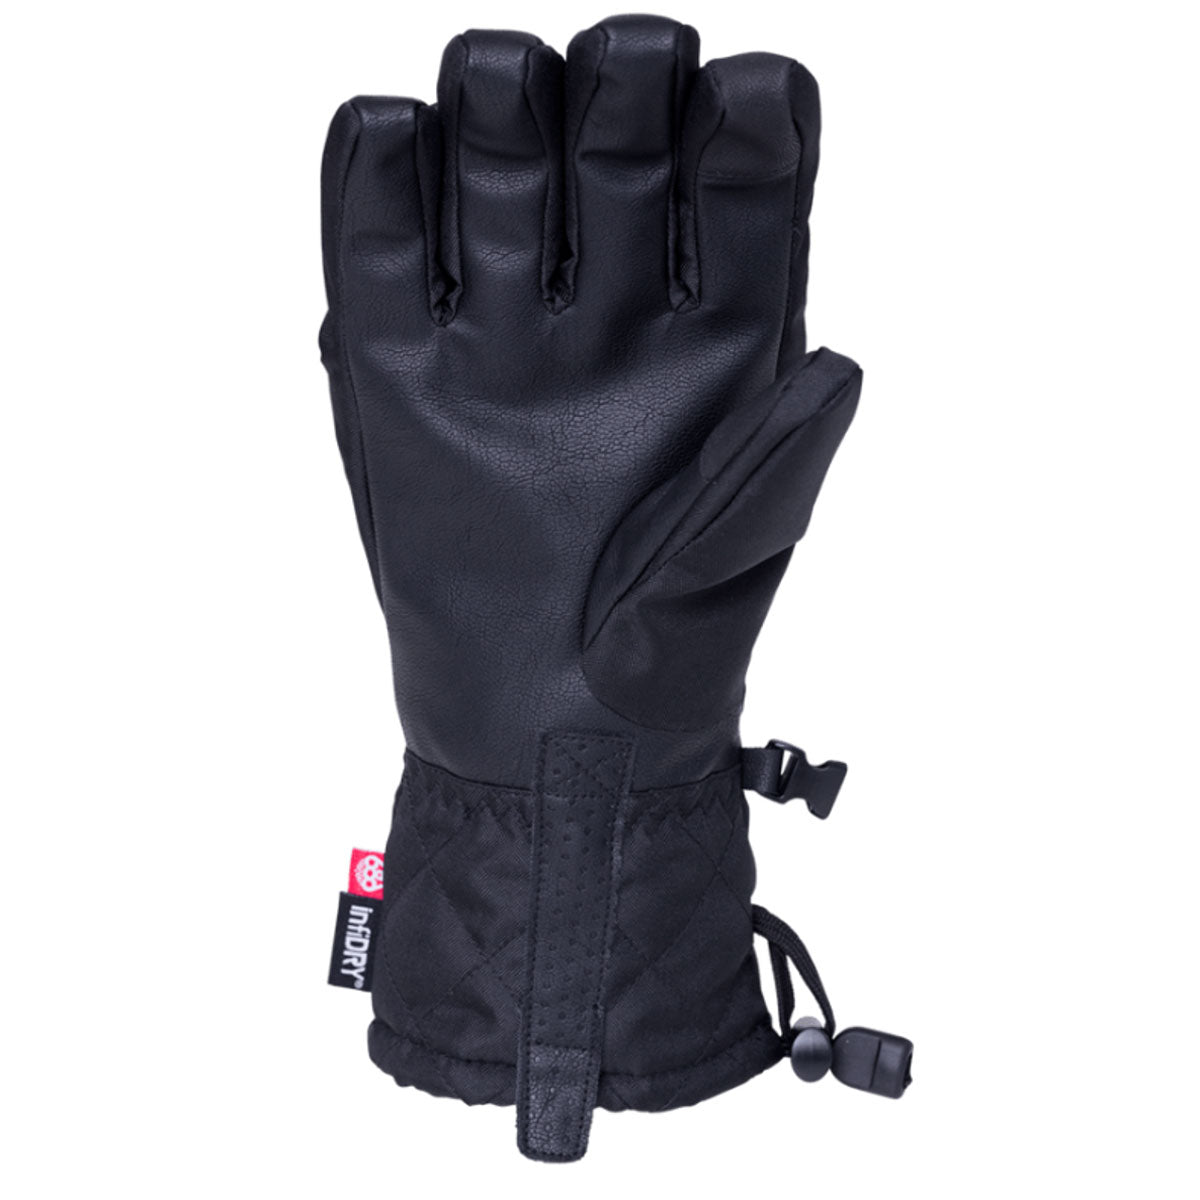 686 Womens Jubilee Snowboard Gloves - Black image 2